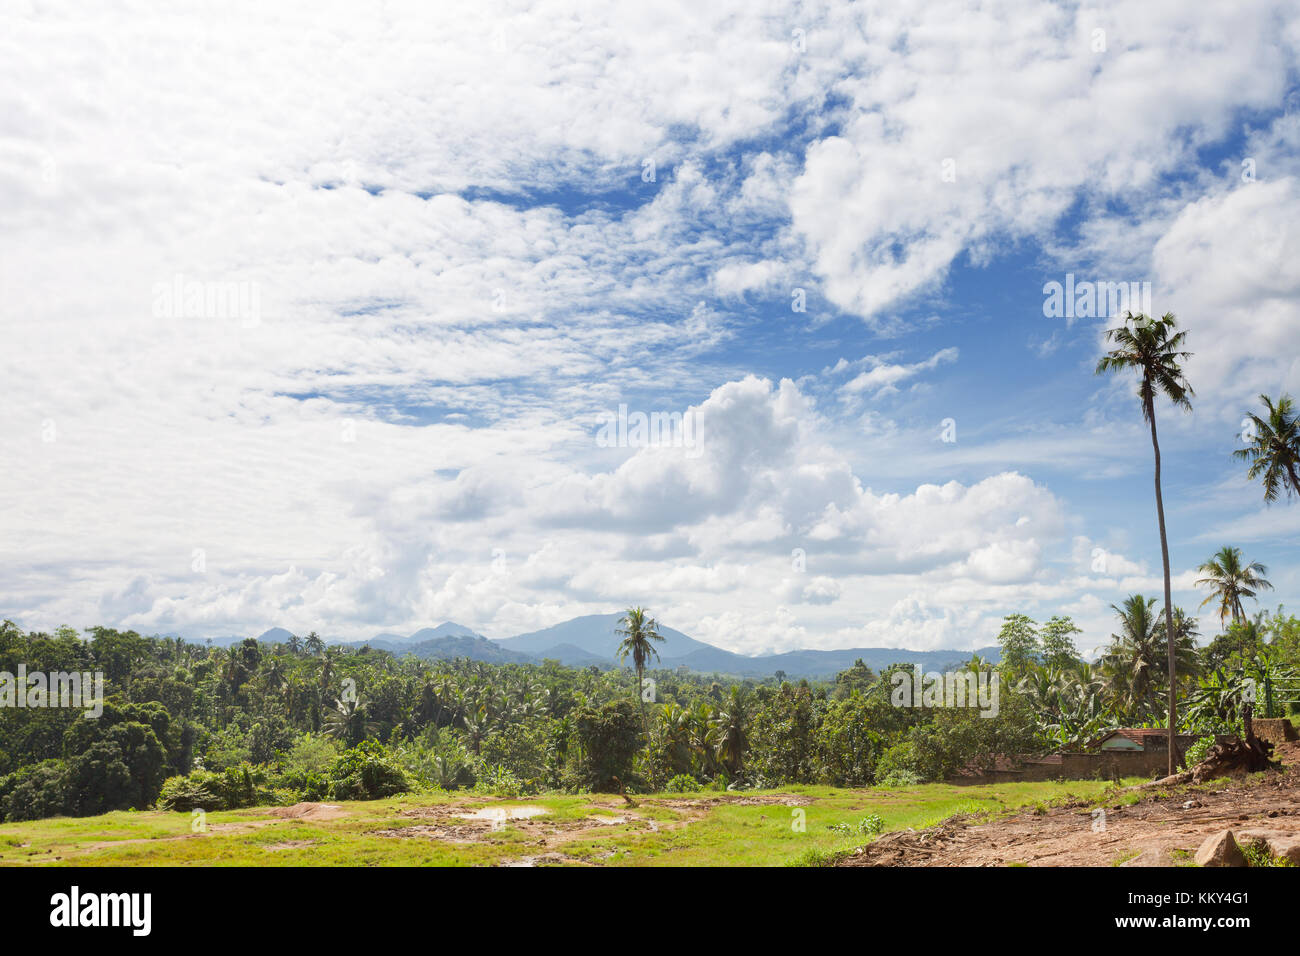 Wild landscape at Pinnawala - Sri Lanka, Asia Stock Photo